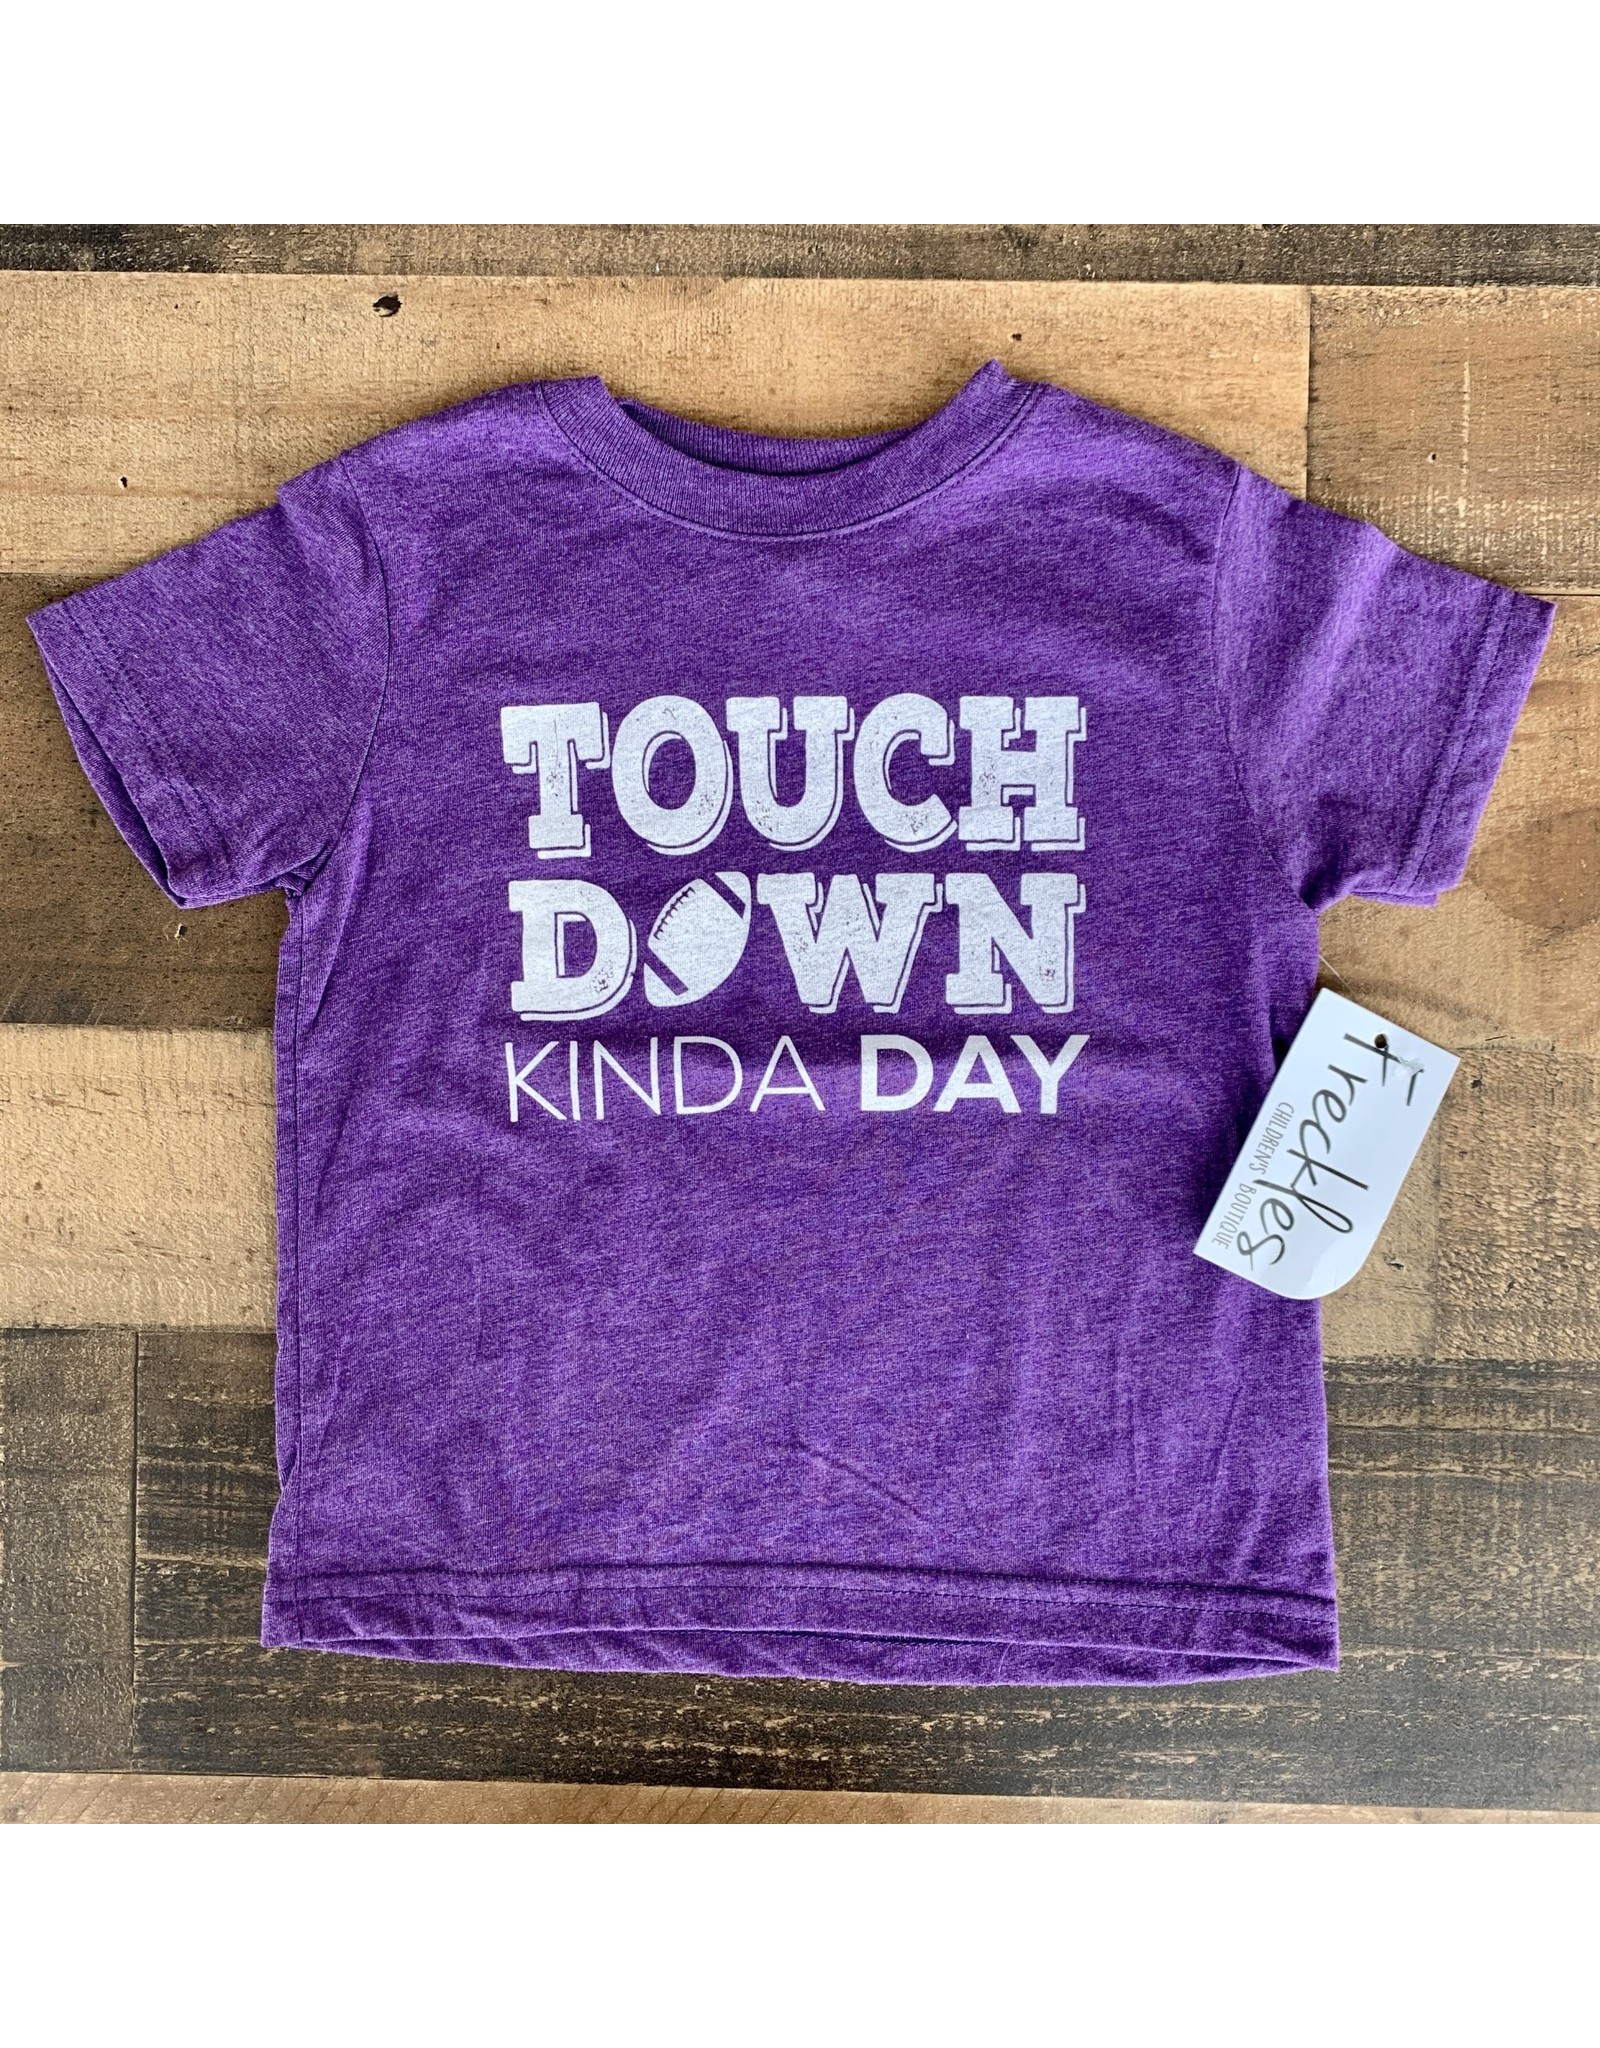 Touch Down Kinda Day TShirt: Purple